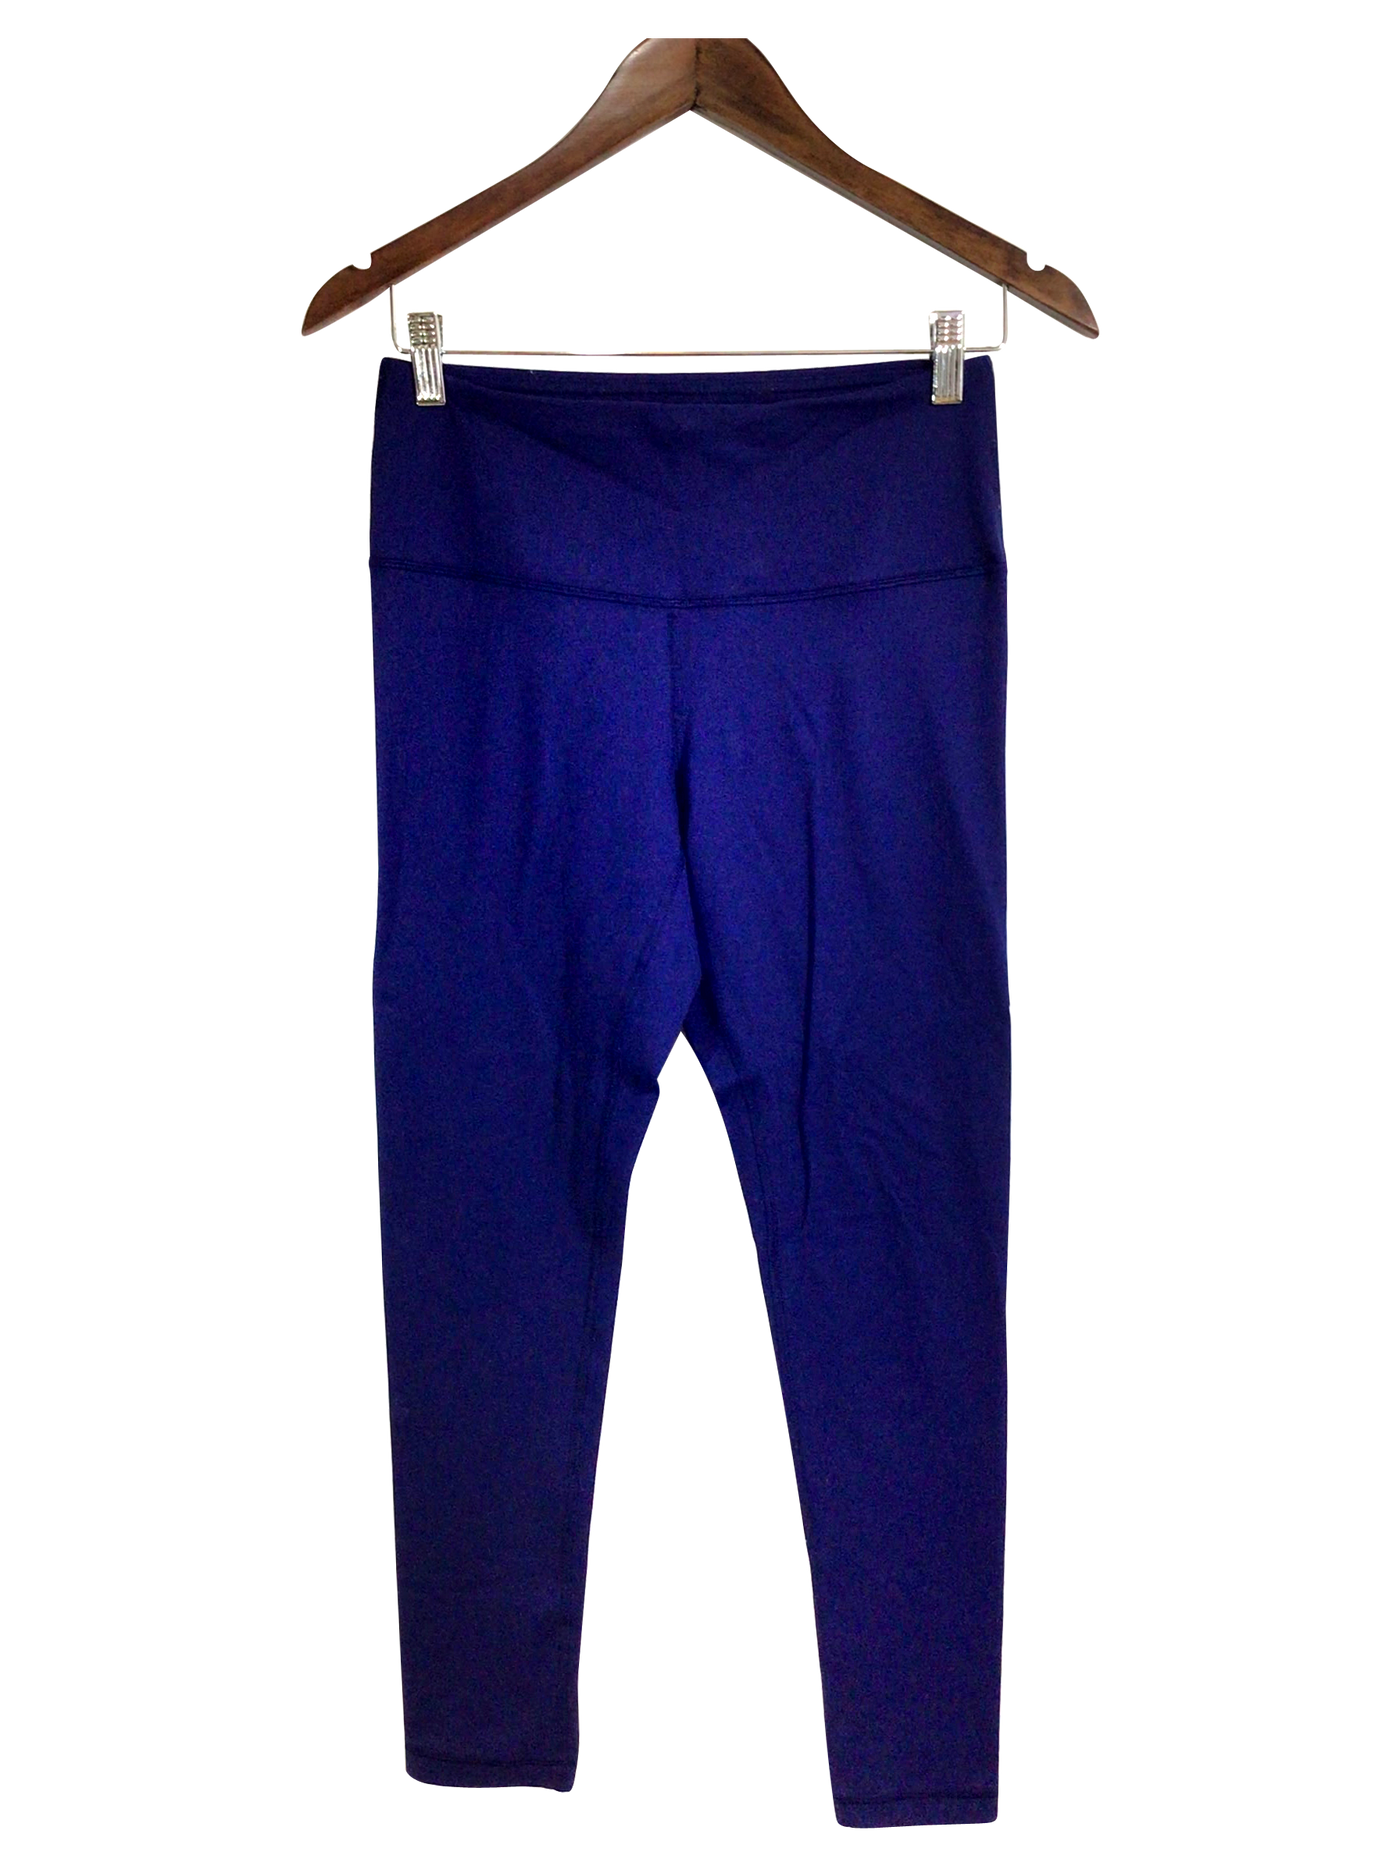 90 DEGREES BY REFLEX Activewear Legging Regular fit in Blue - Size M | 7.09 $ KOOP